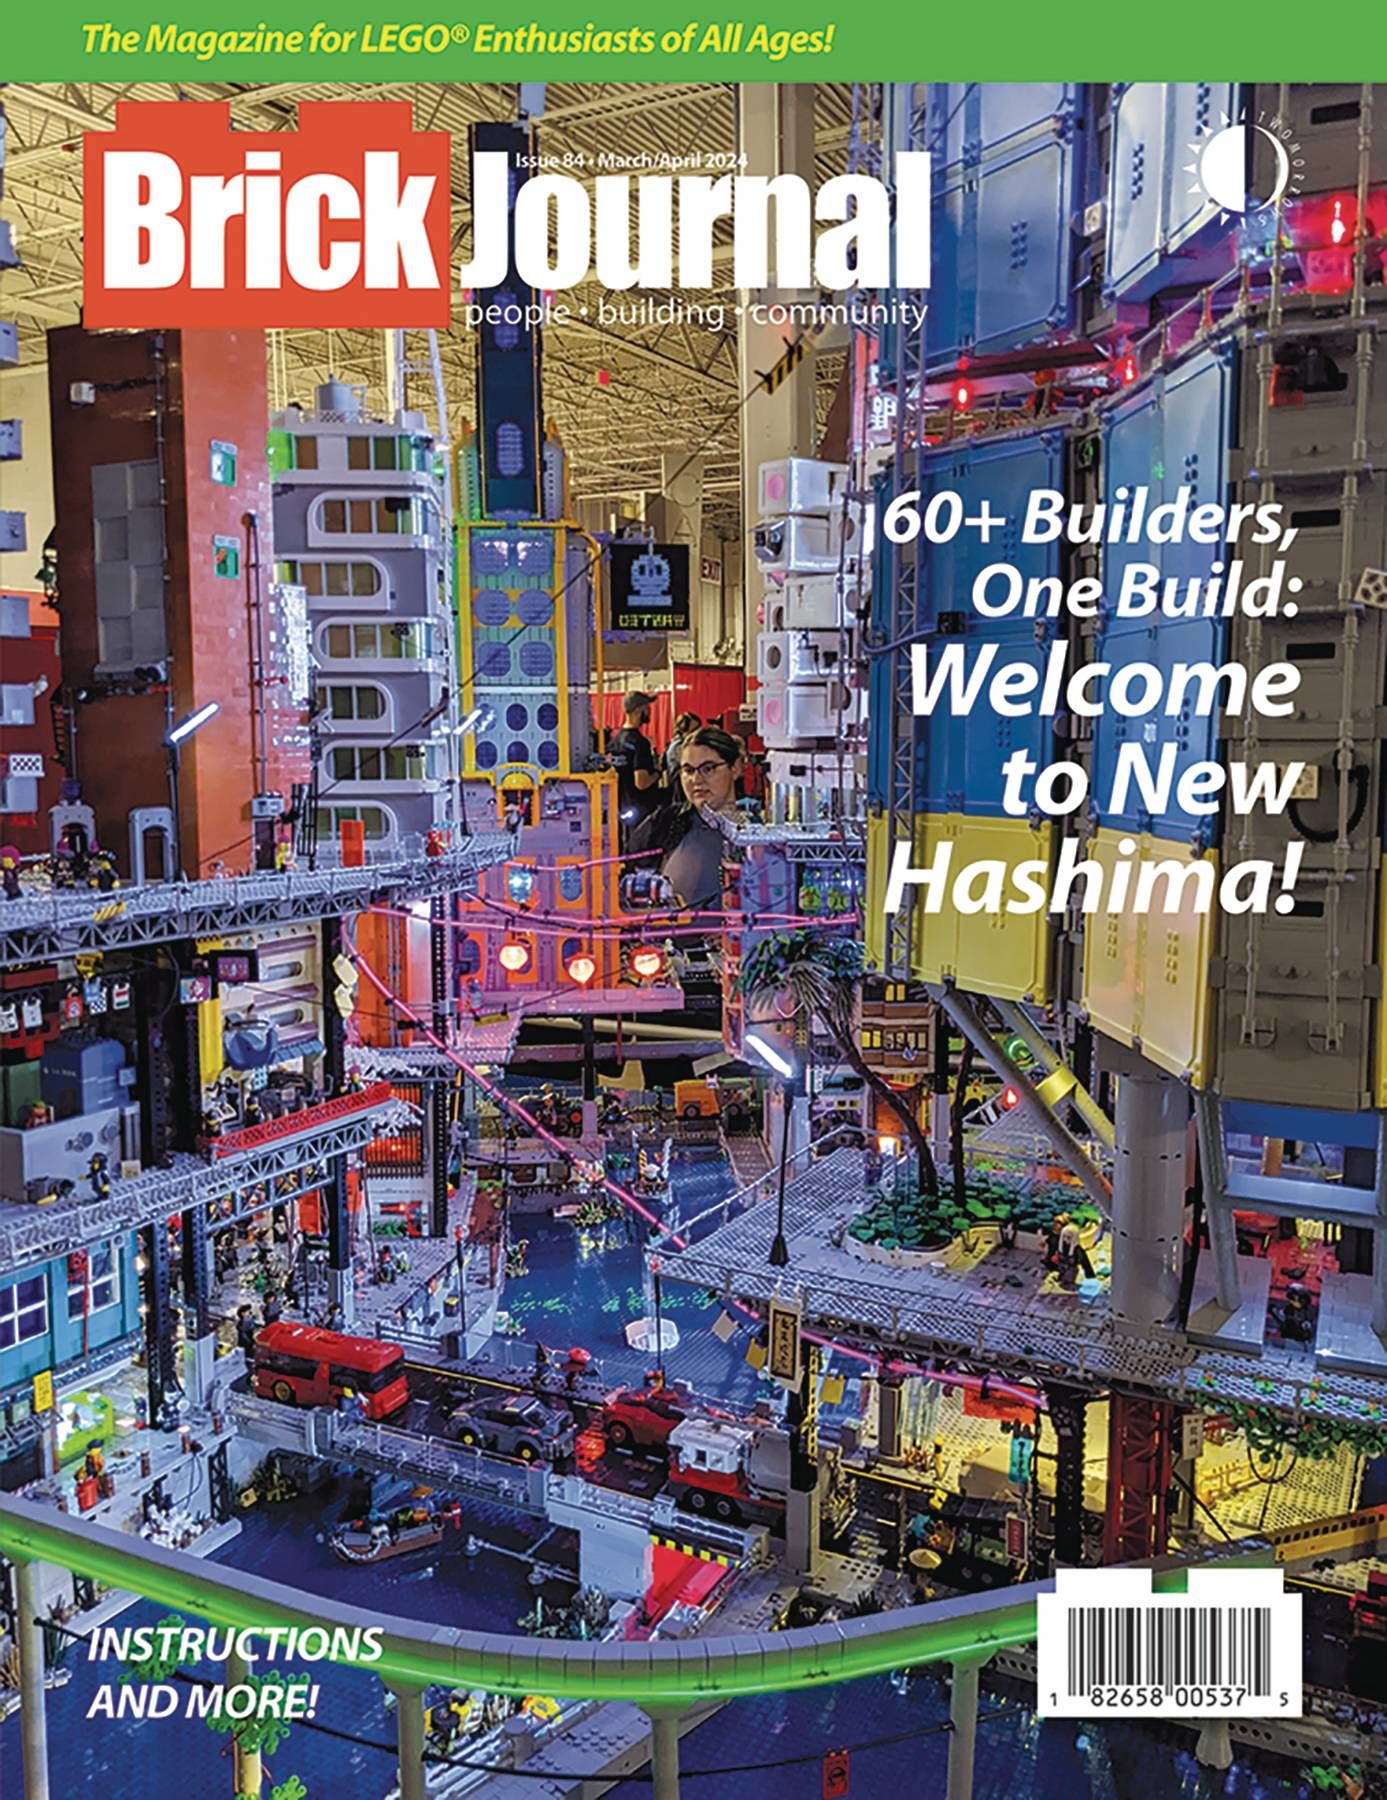 Brickjournal #84 Magazine